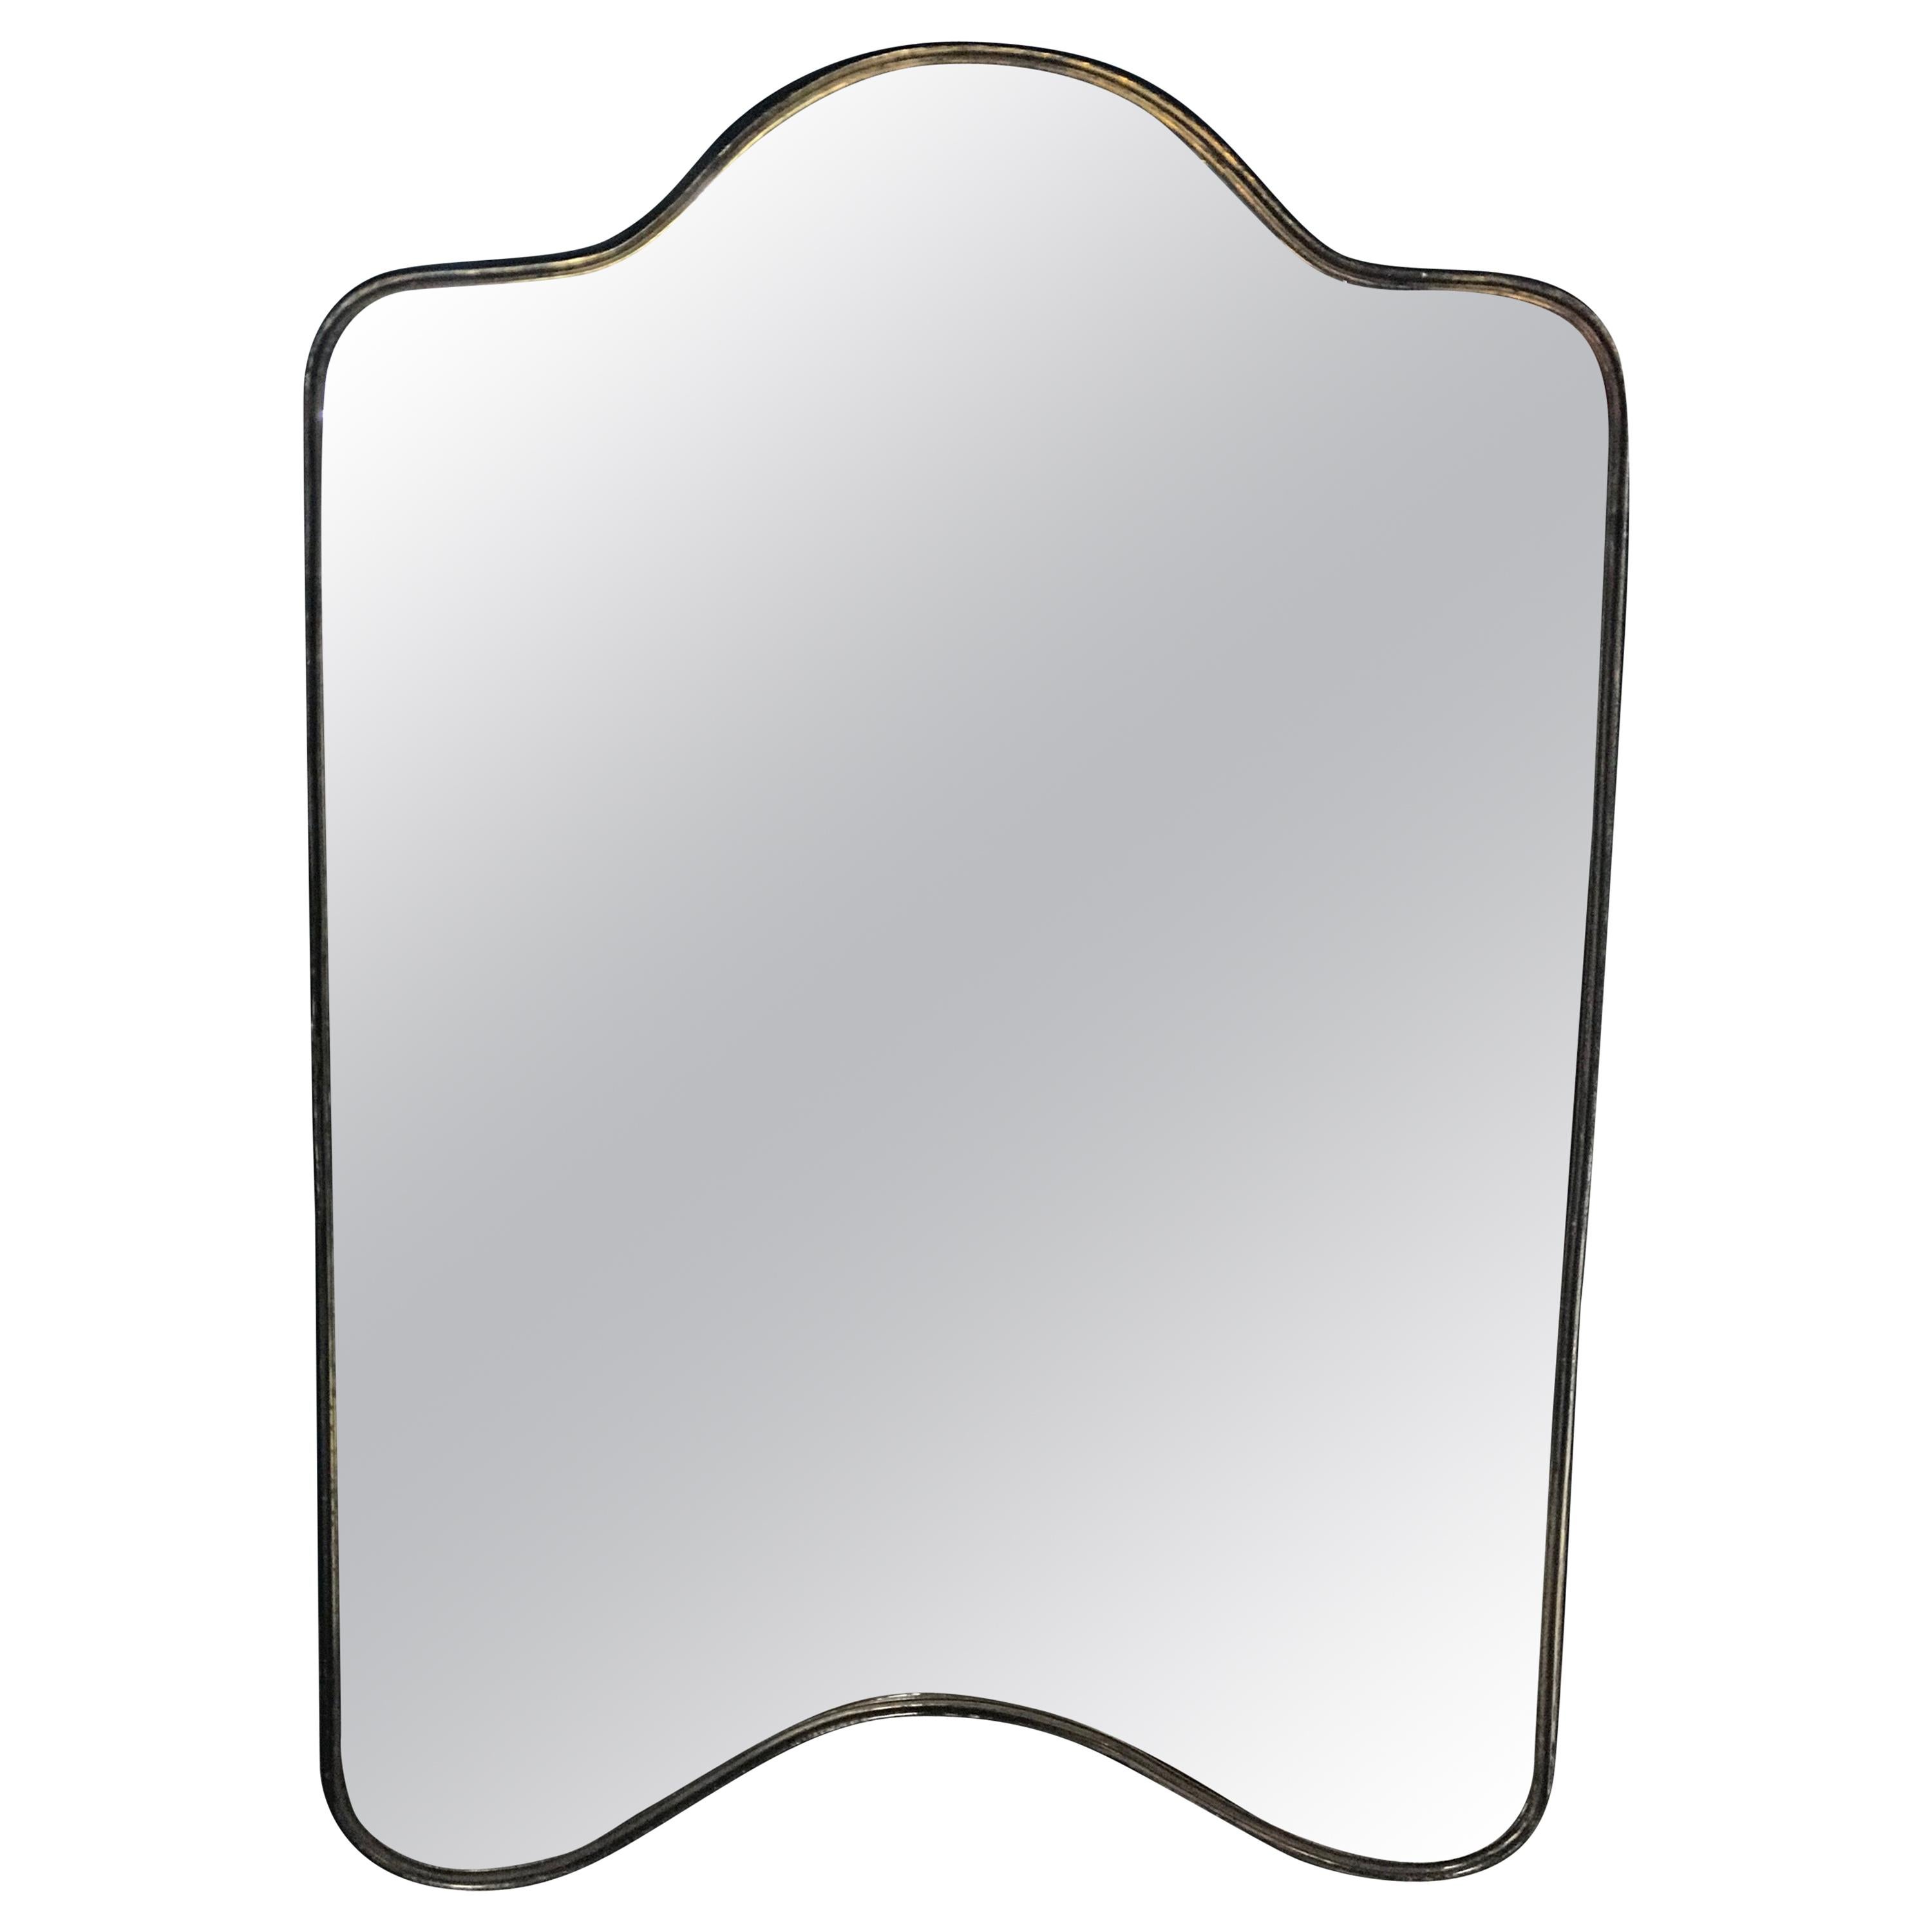 Brass Frame Italian Shield Mirror, 1950s